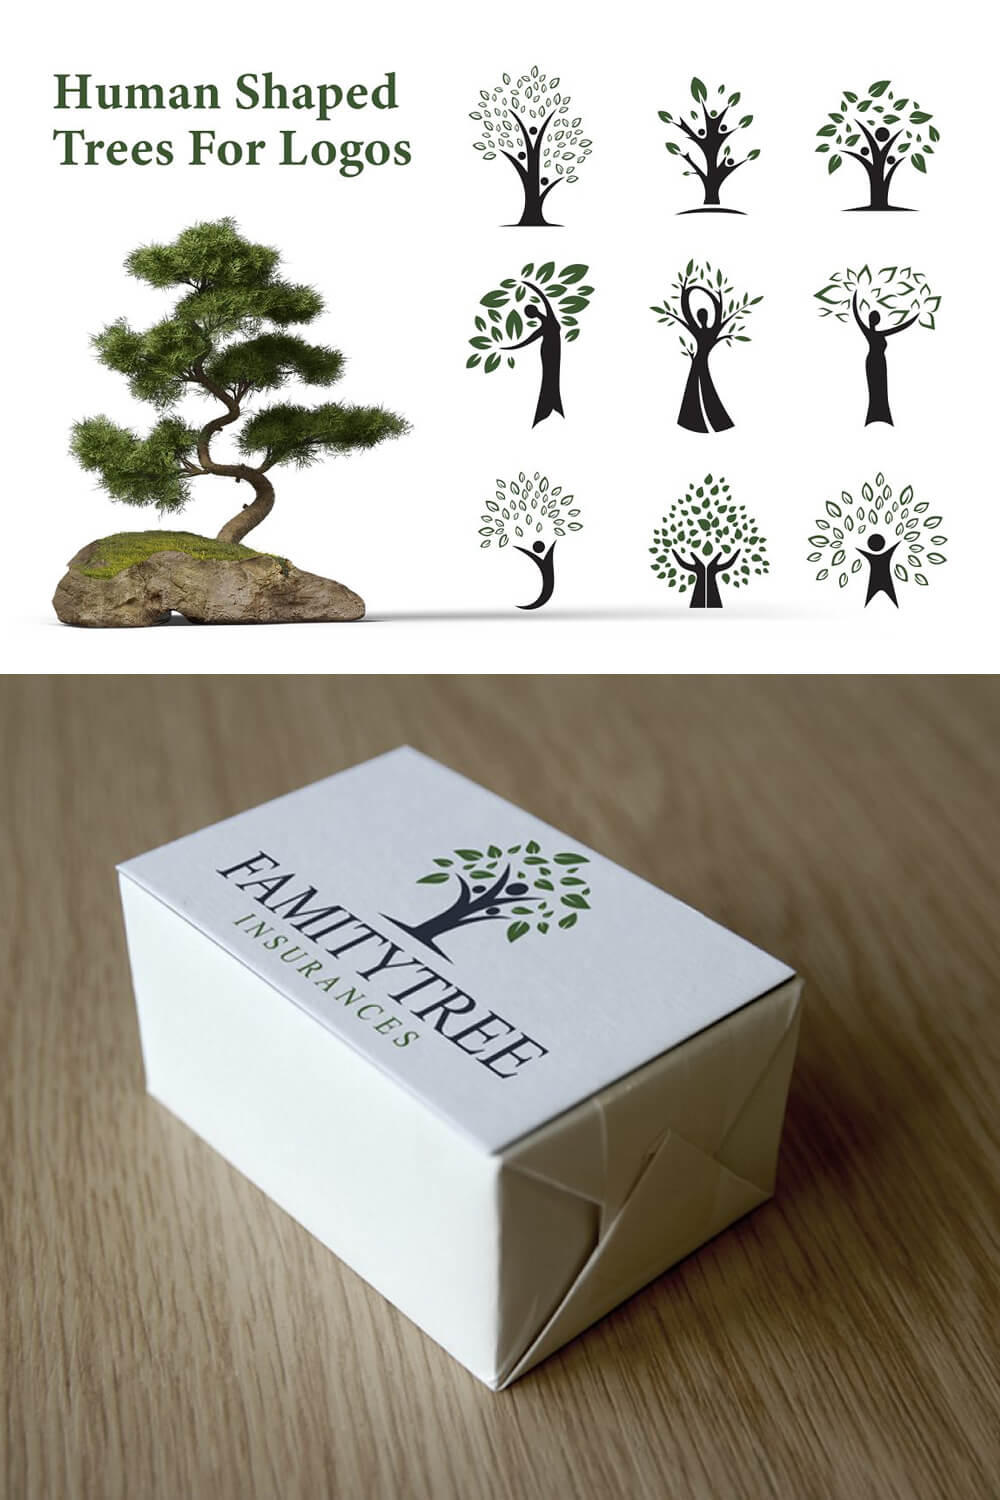 Human Shaped Trees for logos.